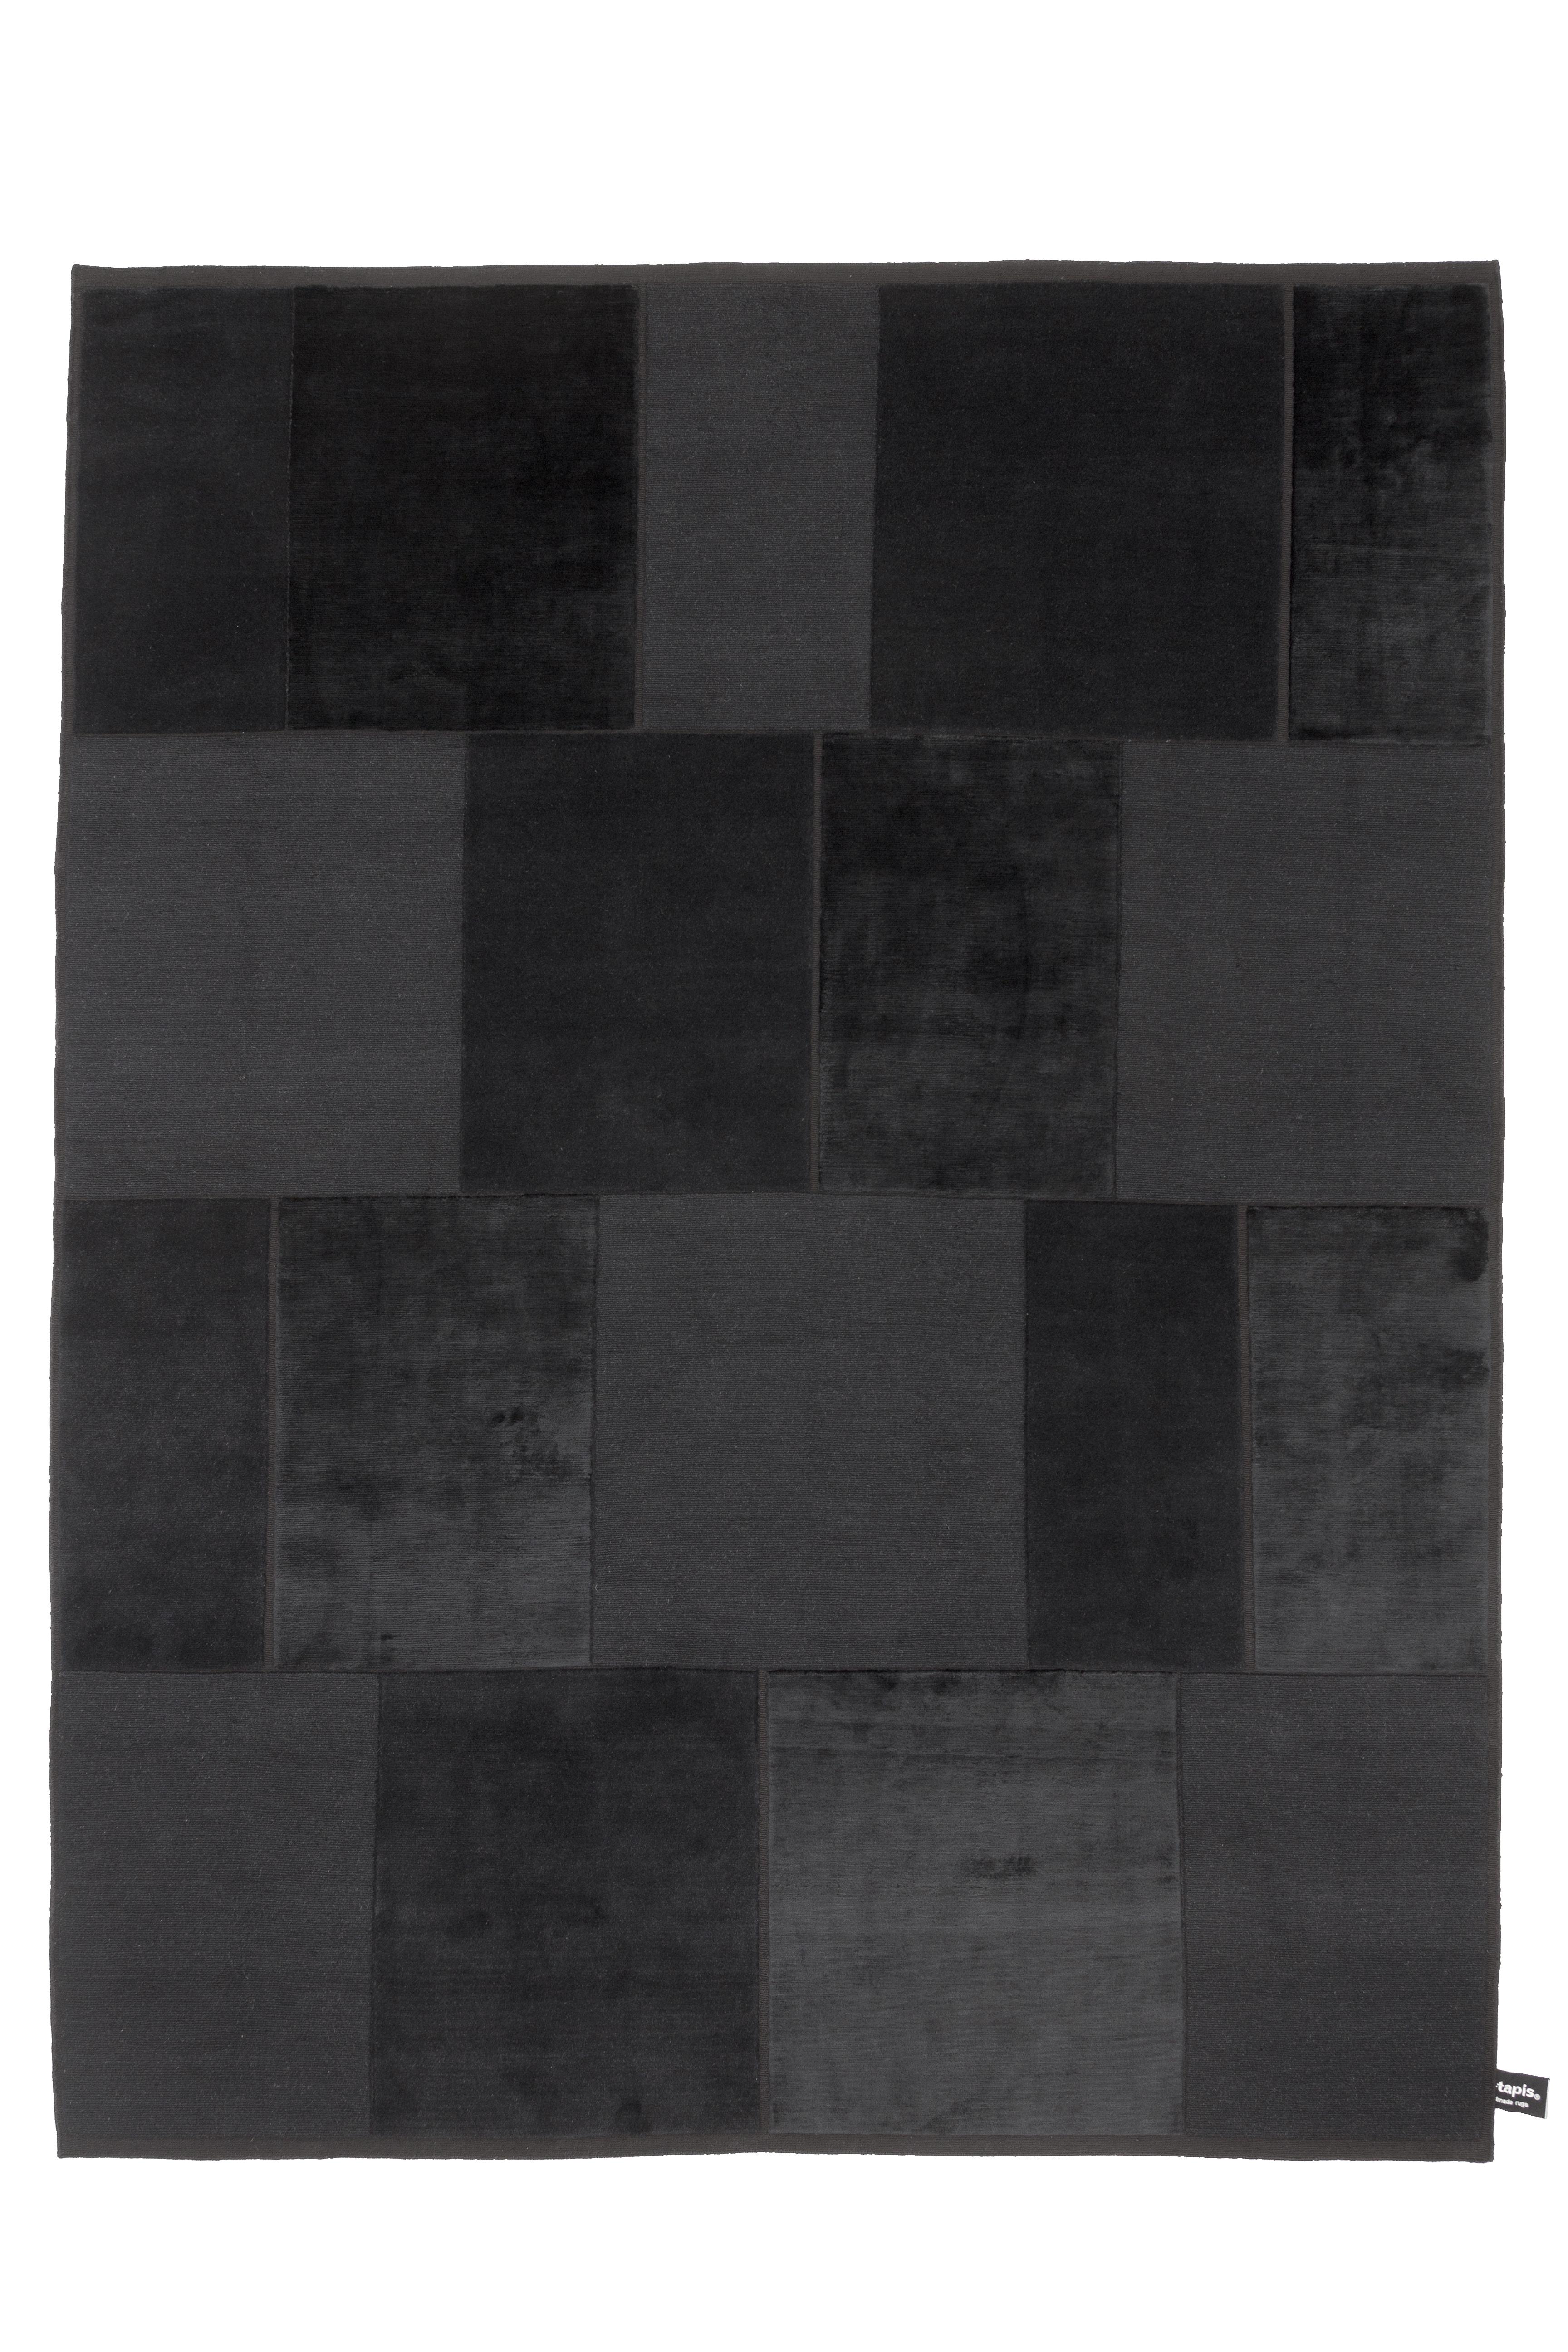 For Sale: Black (Black (BT-01)) cc-tapis Casellario Monocromo Ivory Rug by A. Parisotto & M. Formenton